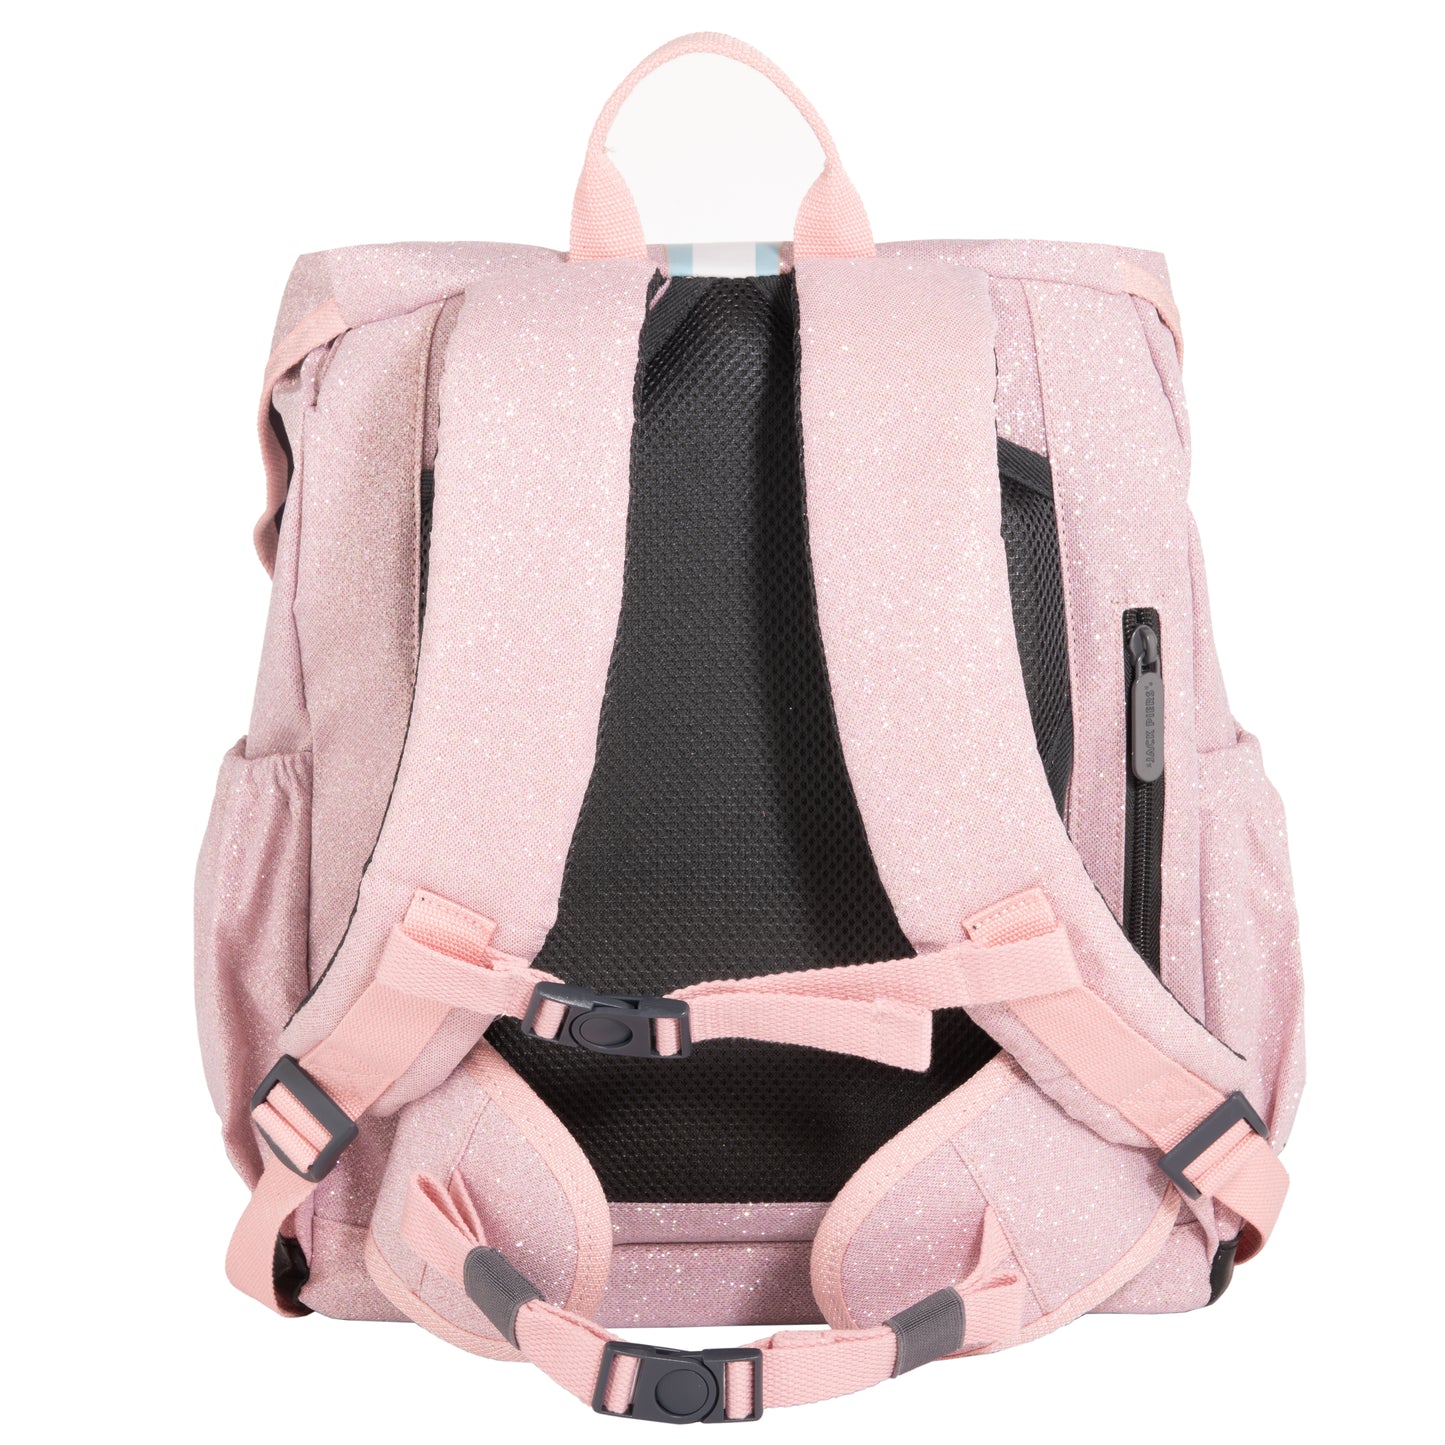 Jack Piers Rugzak/Backpack Berlin Flamingo - 36x13x29cm - Roze